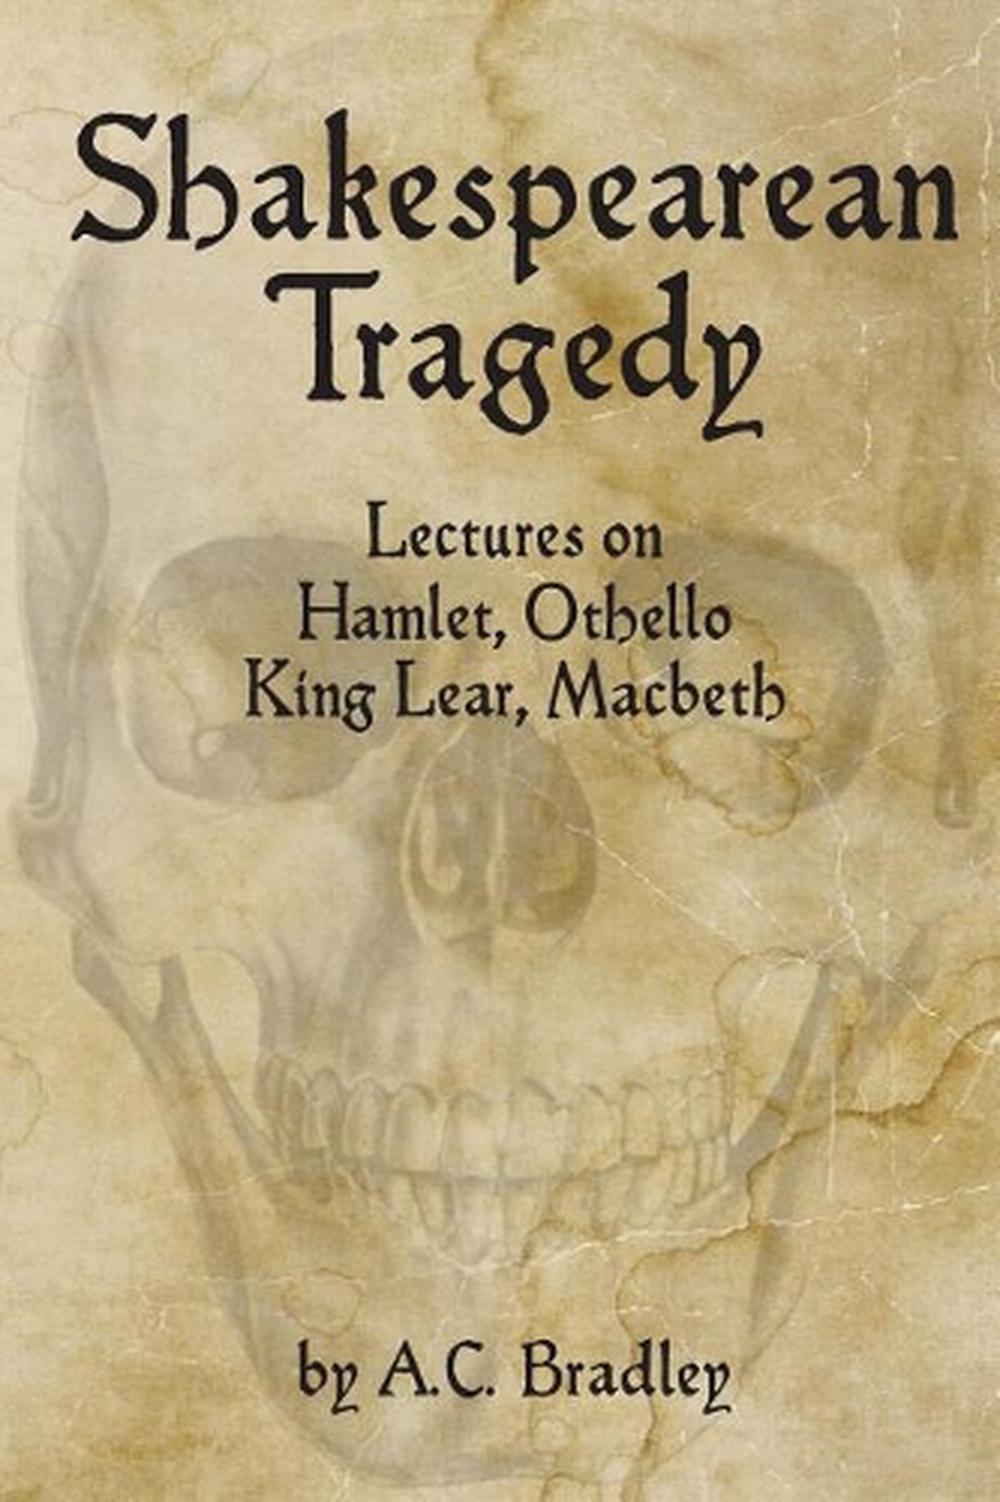 lectures on hamlet o thello shakespeer tragedy